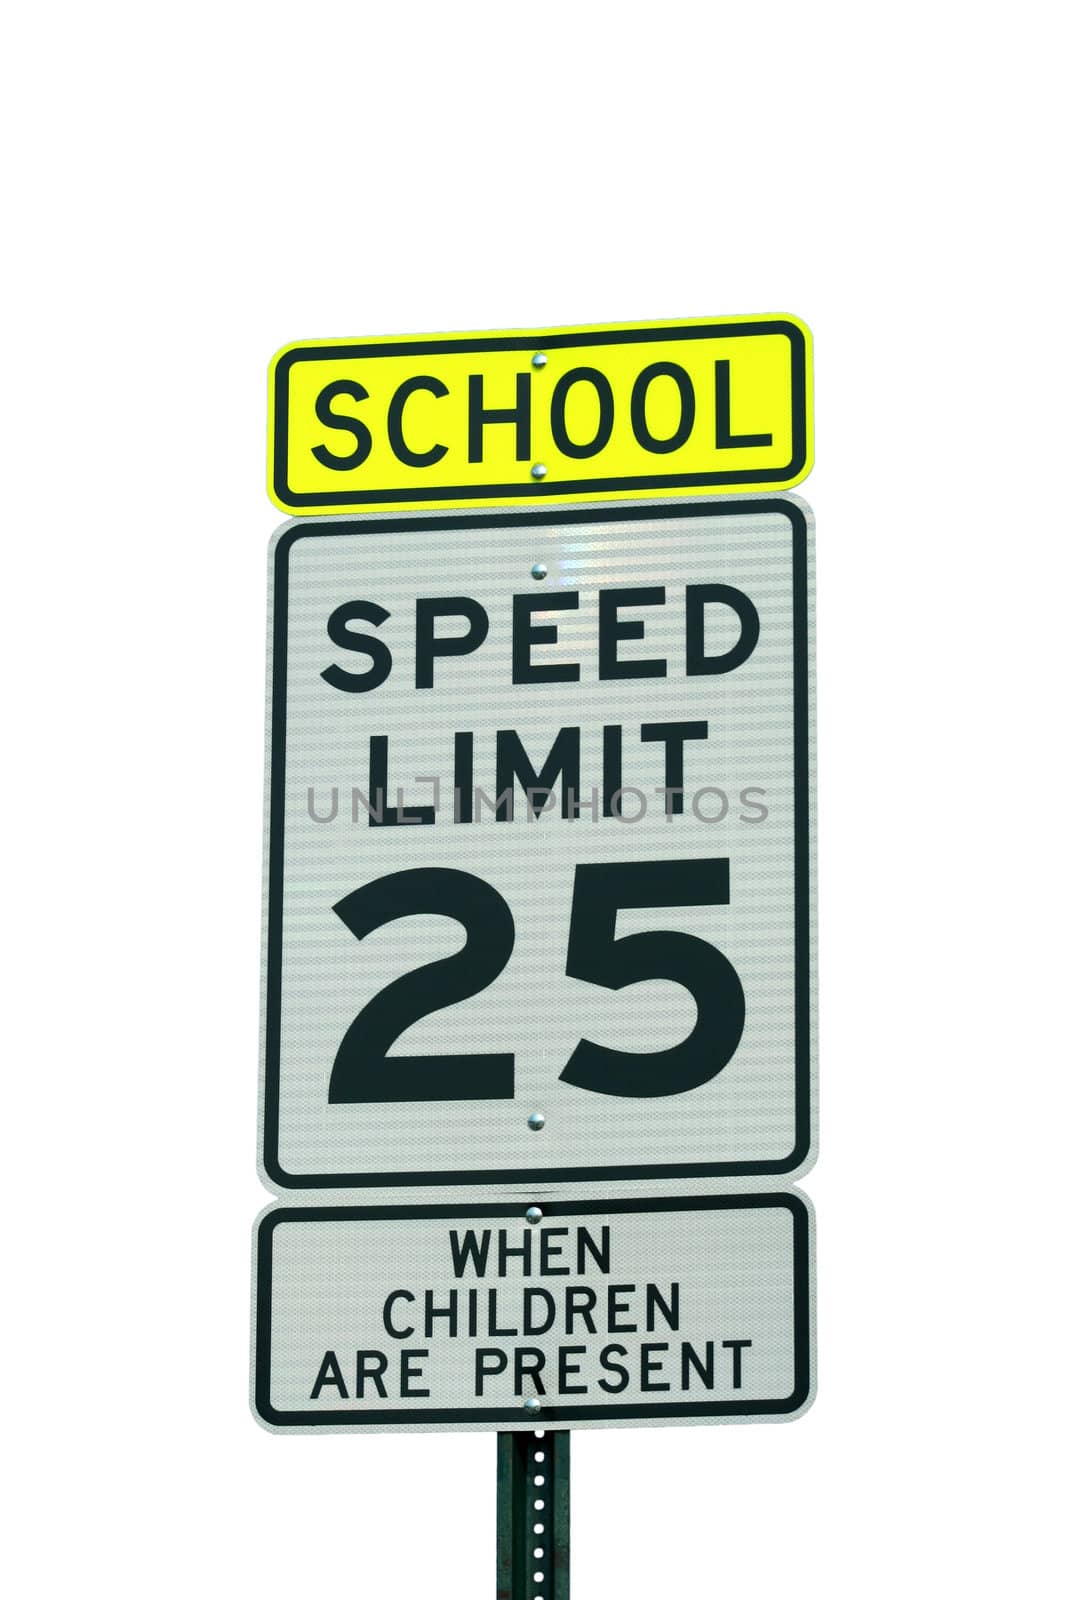 School and 25 mph sign by njnightsky